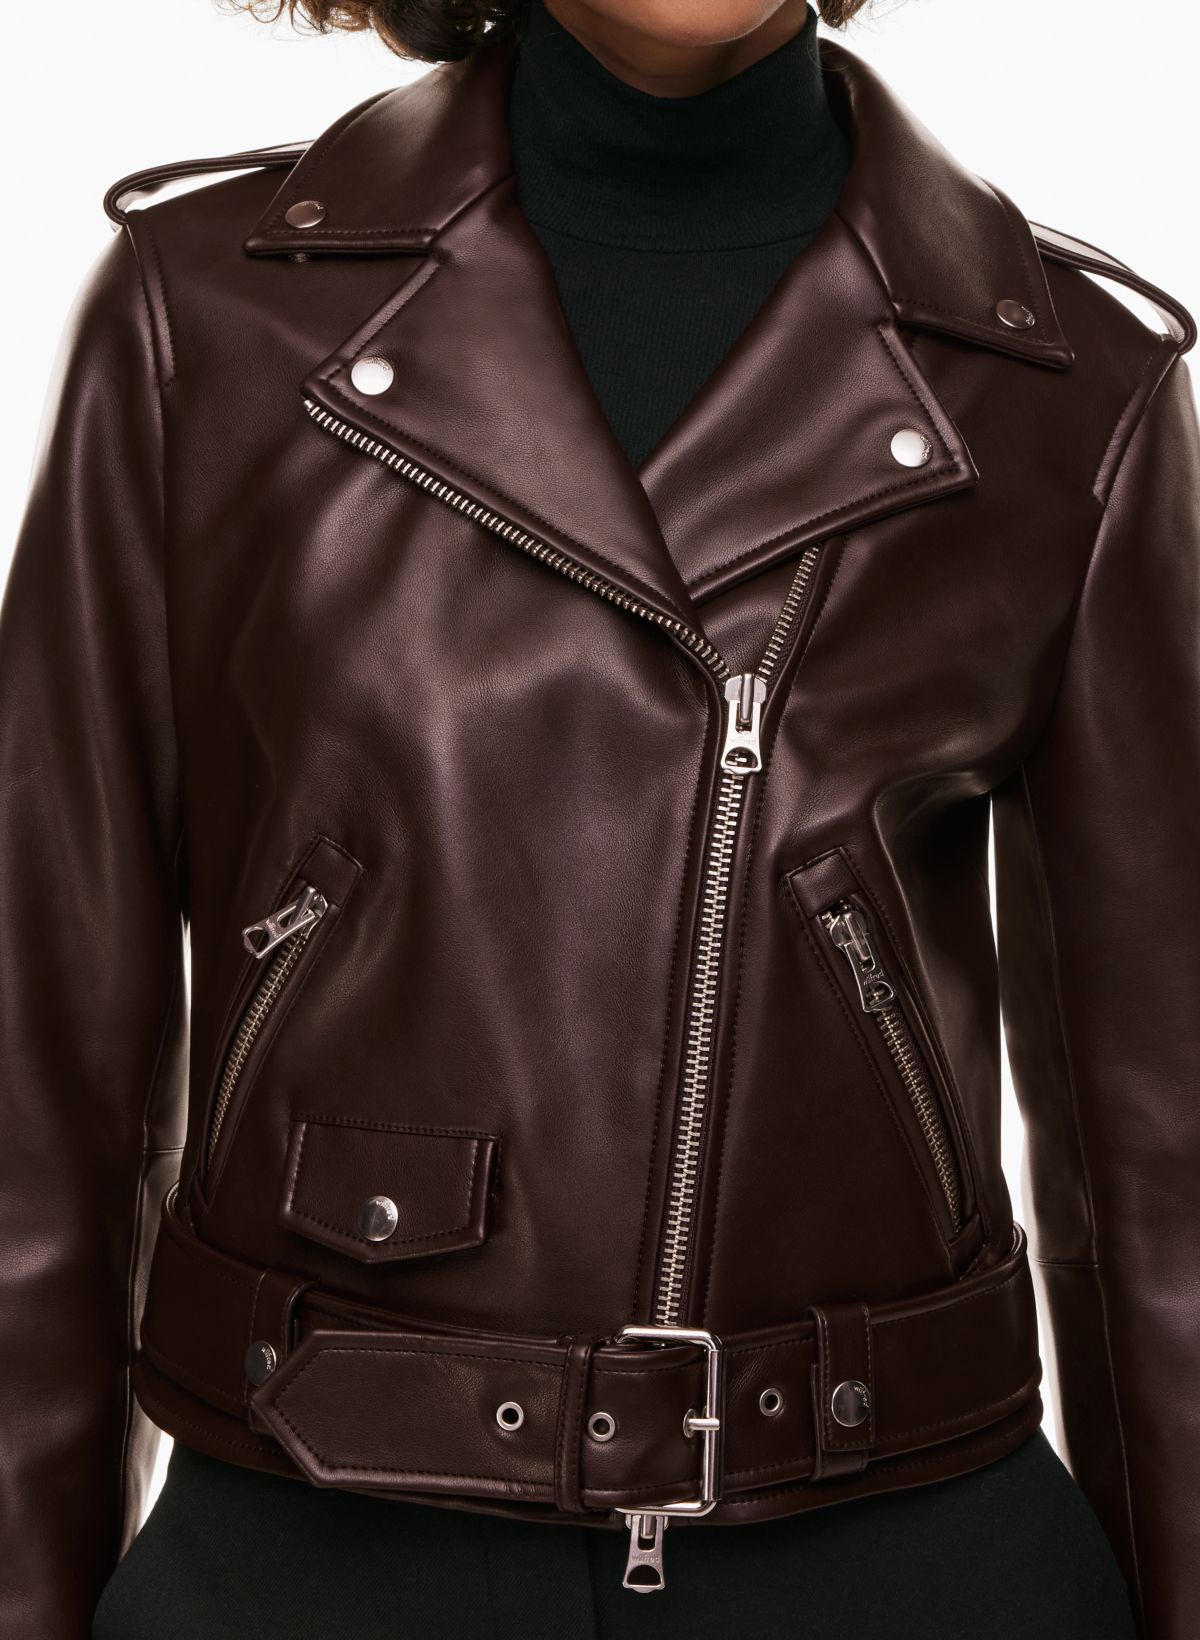 Calvin Klein Black Faux Leather Motorcycle Jacket, $178